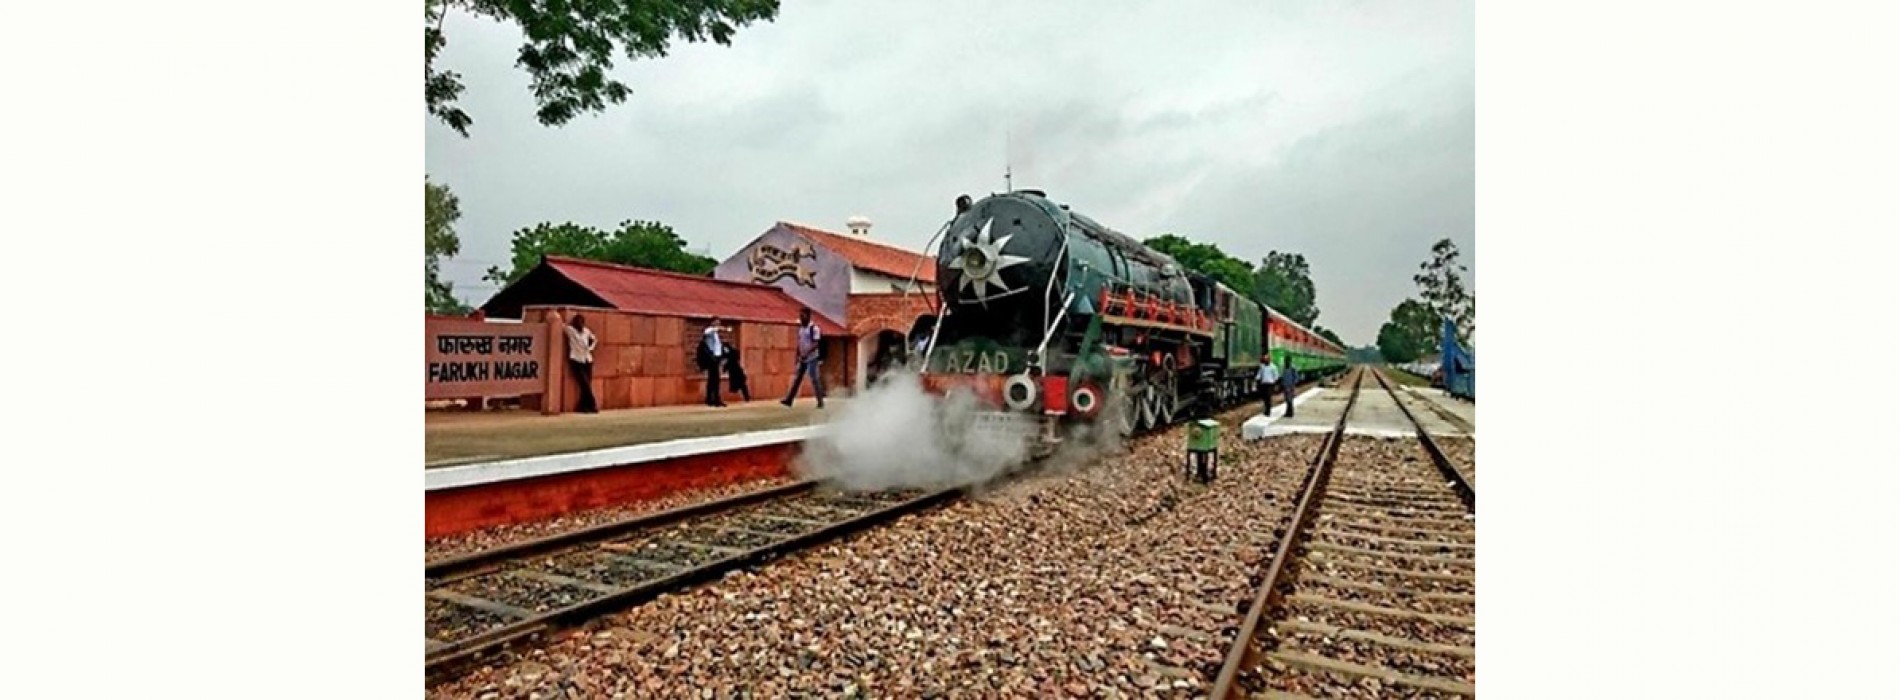 Northern Railway launches heritage steam train